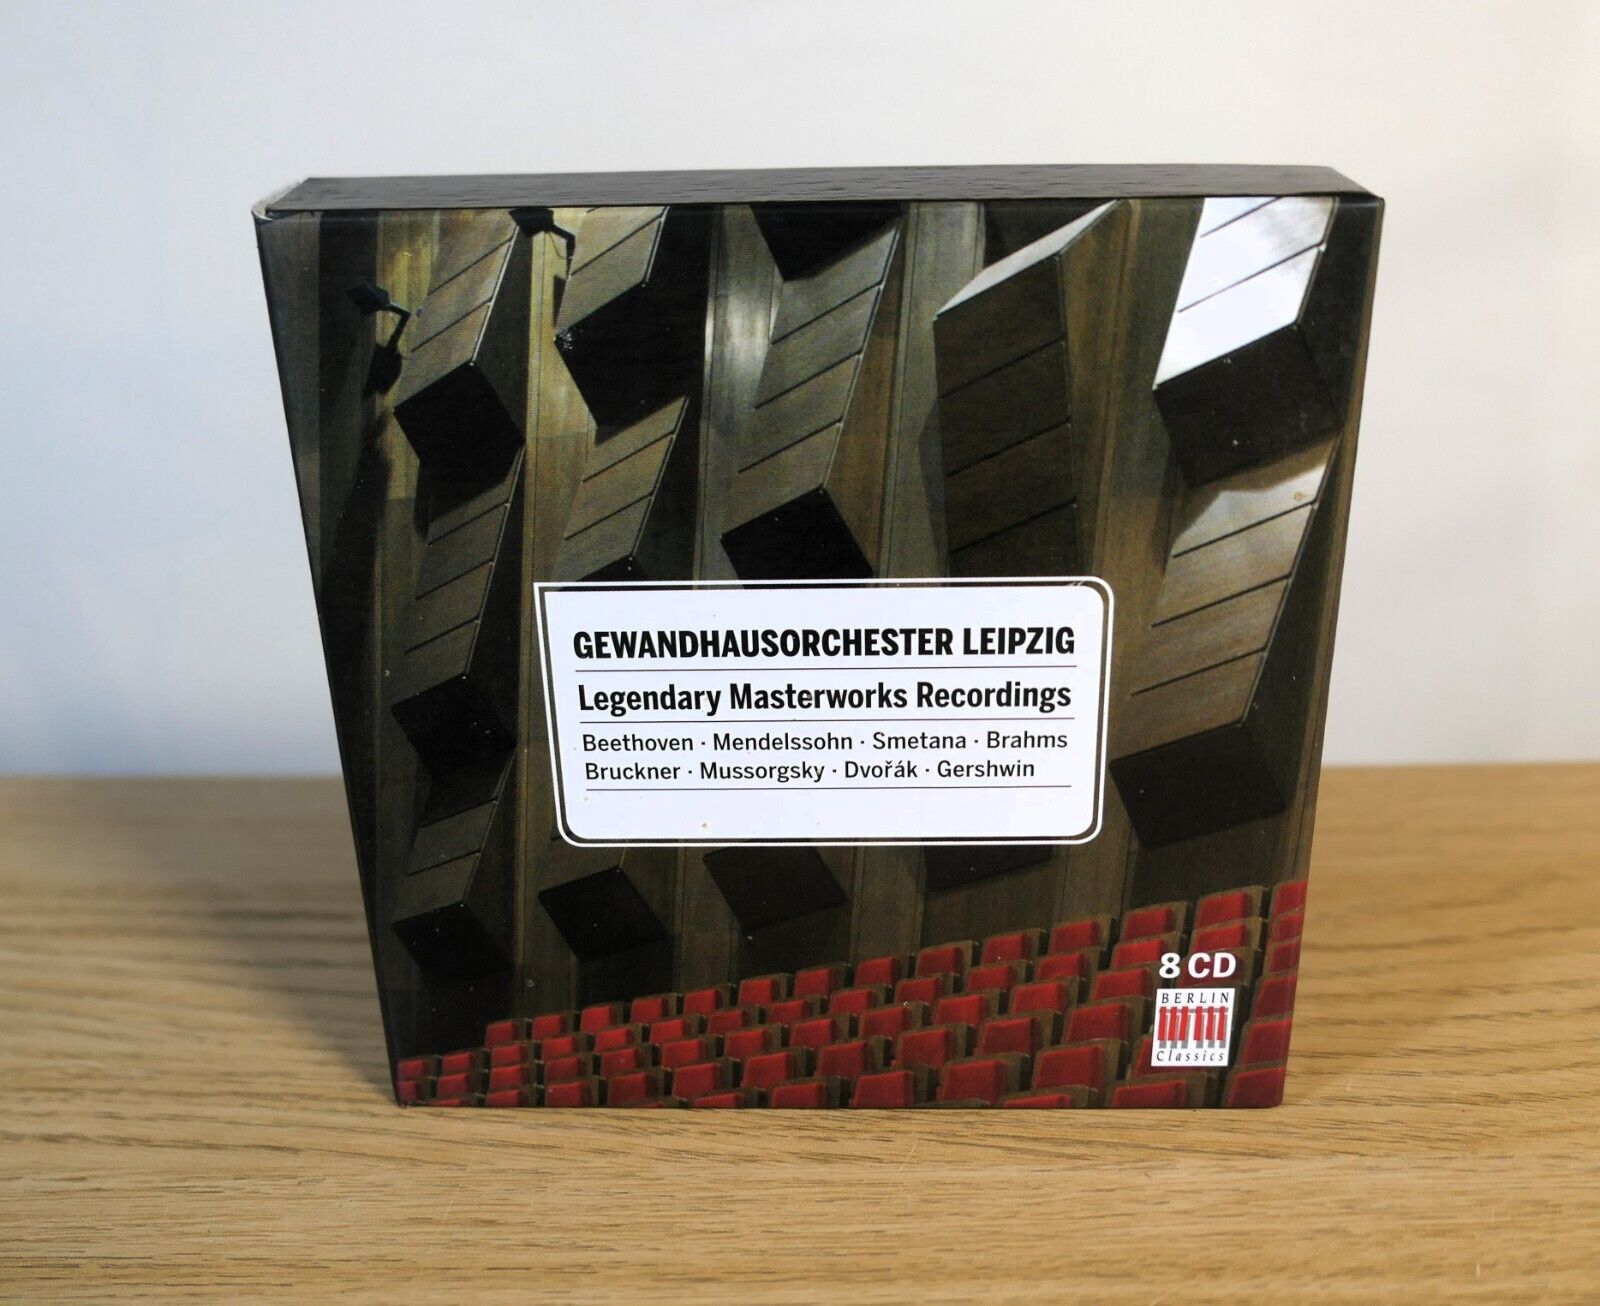 Gewandhausorchester Leipzig Legendary Masterworks Recordings 8CD Berlin Classics